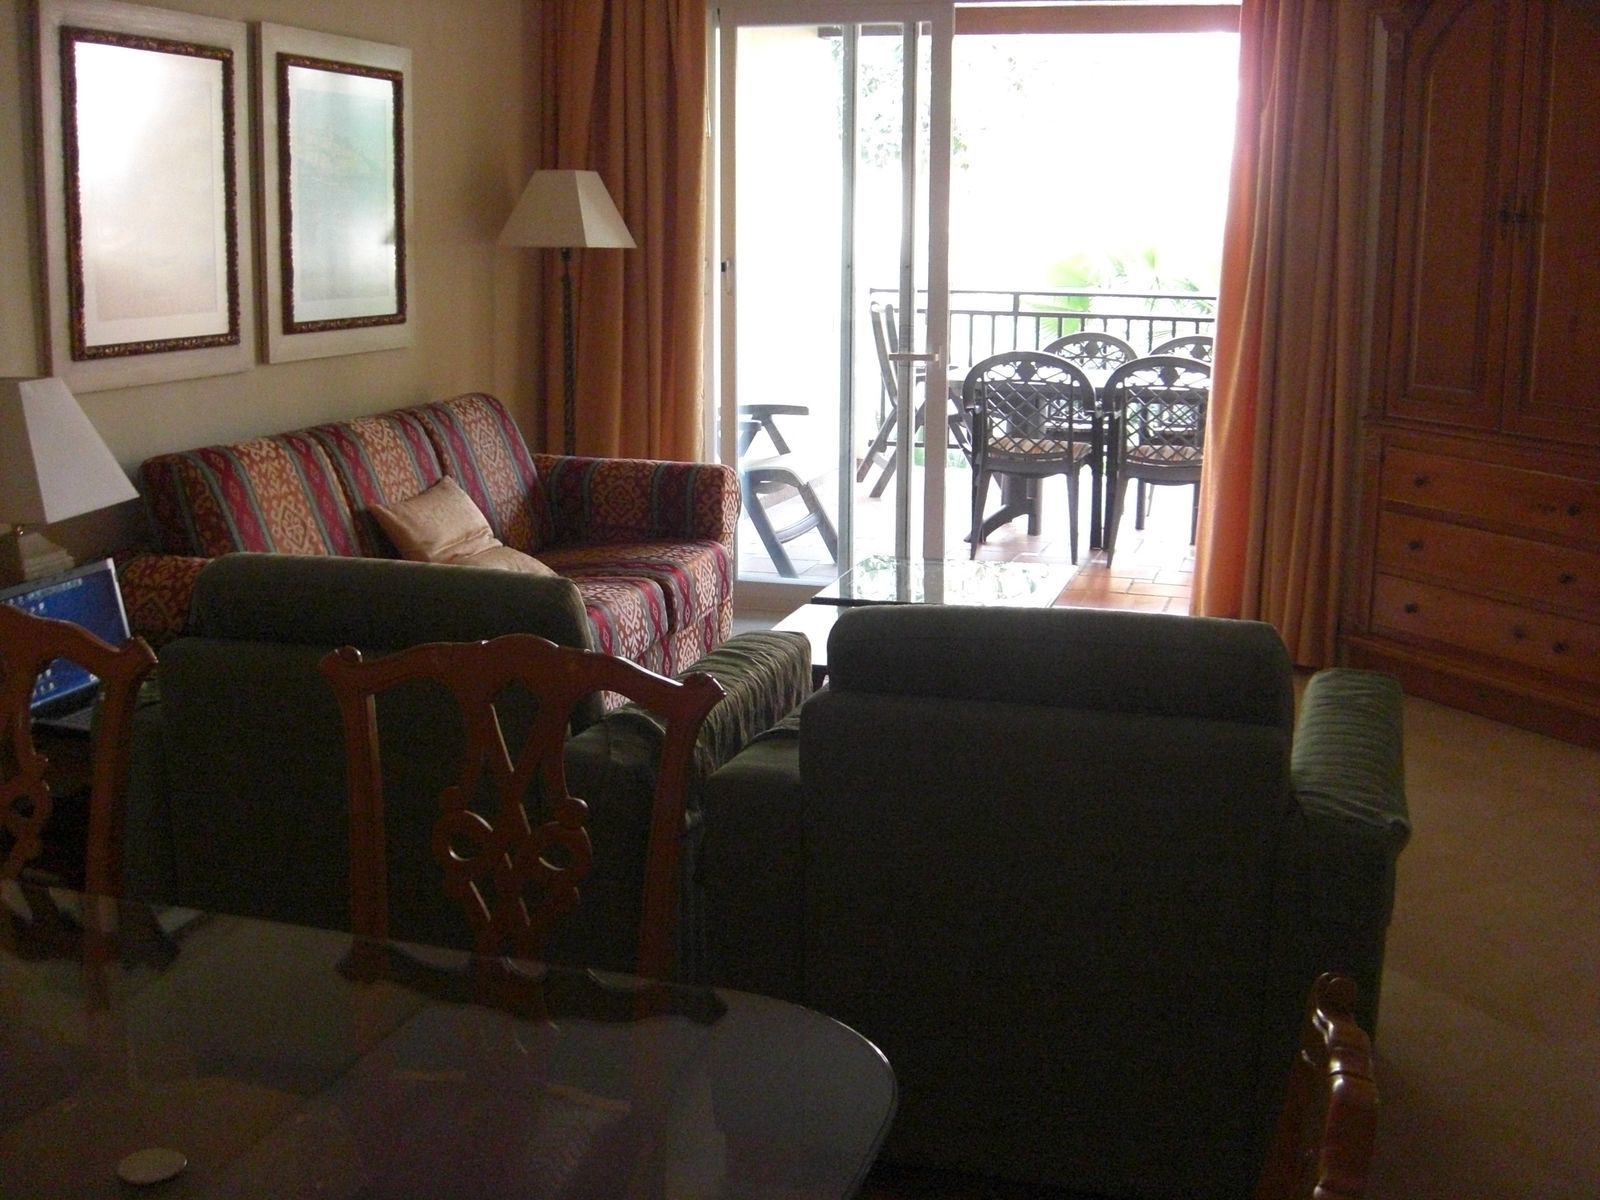 Marriott's Marbella Beach Resort, 3-Bedroom